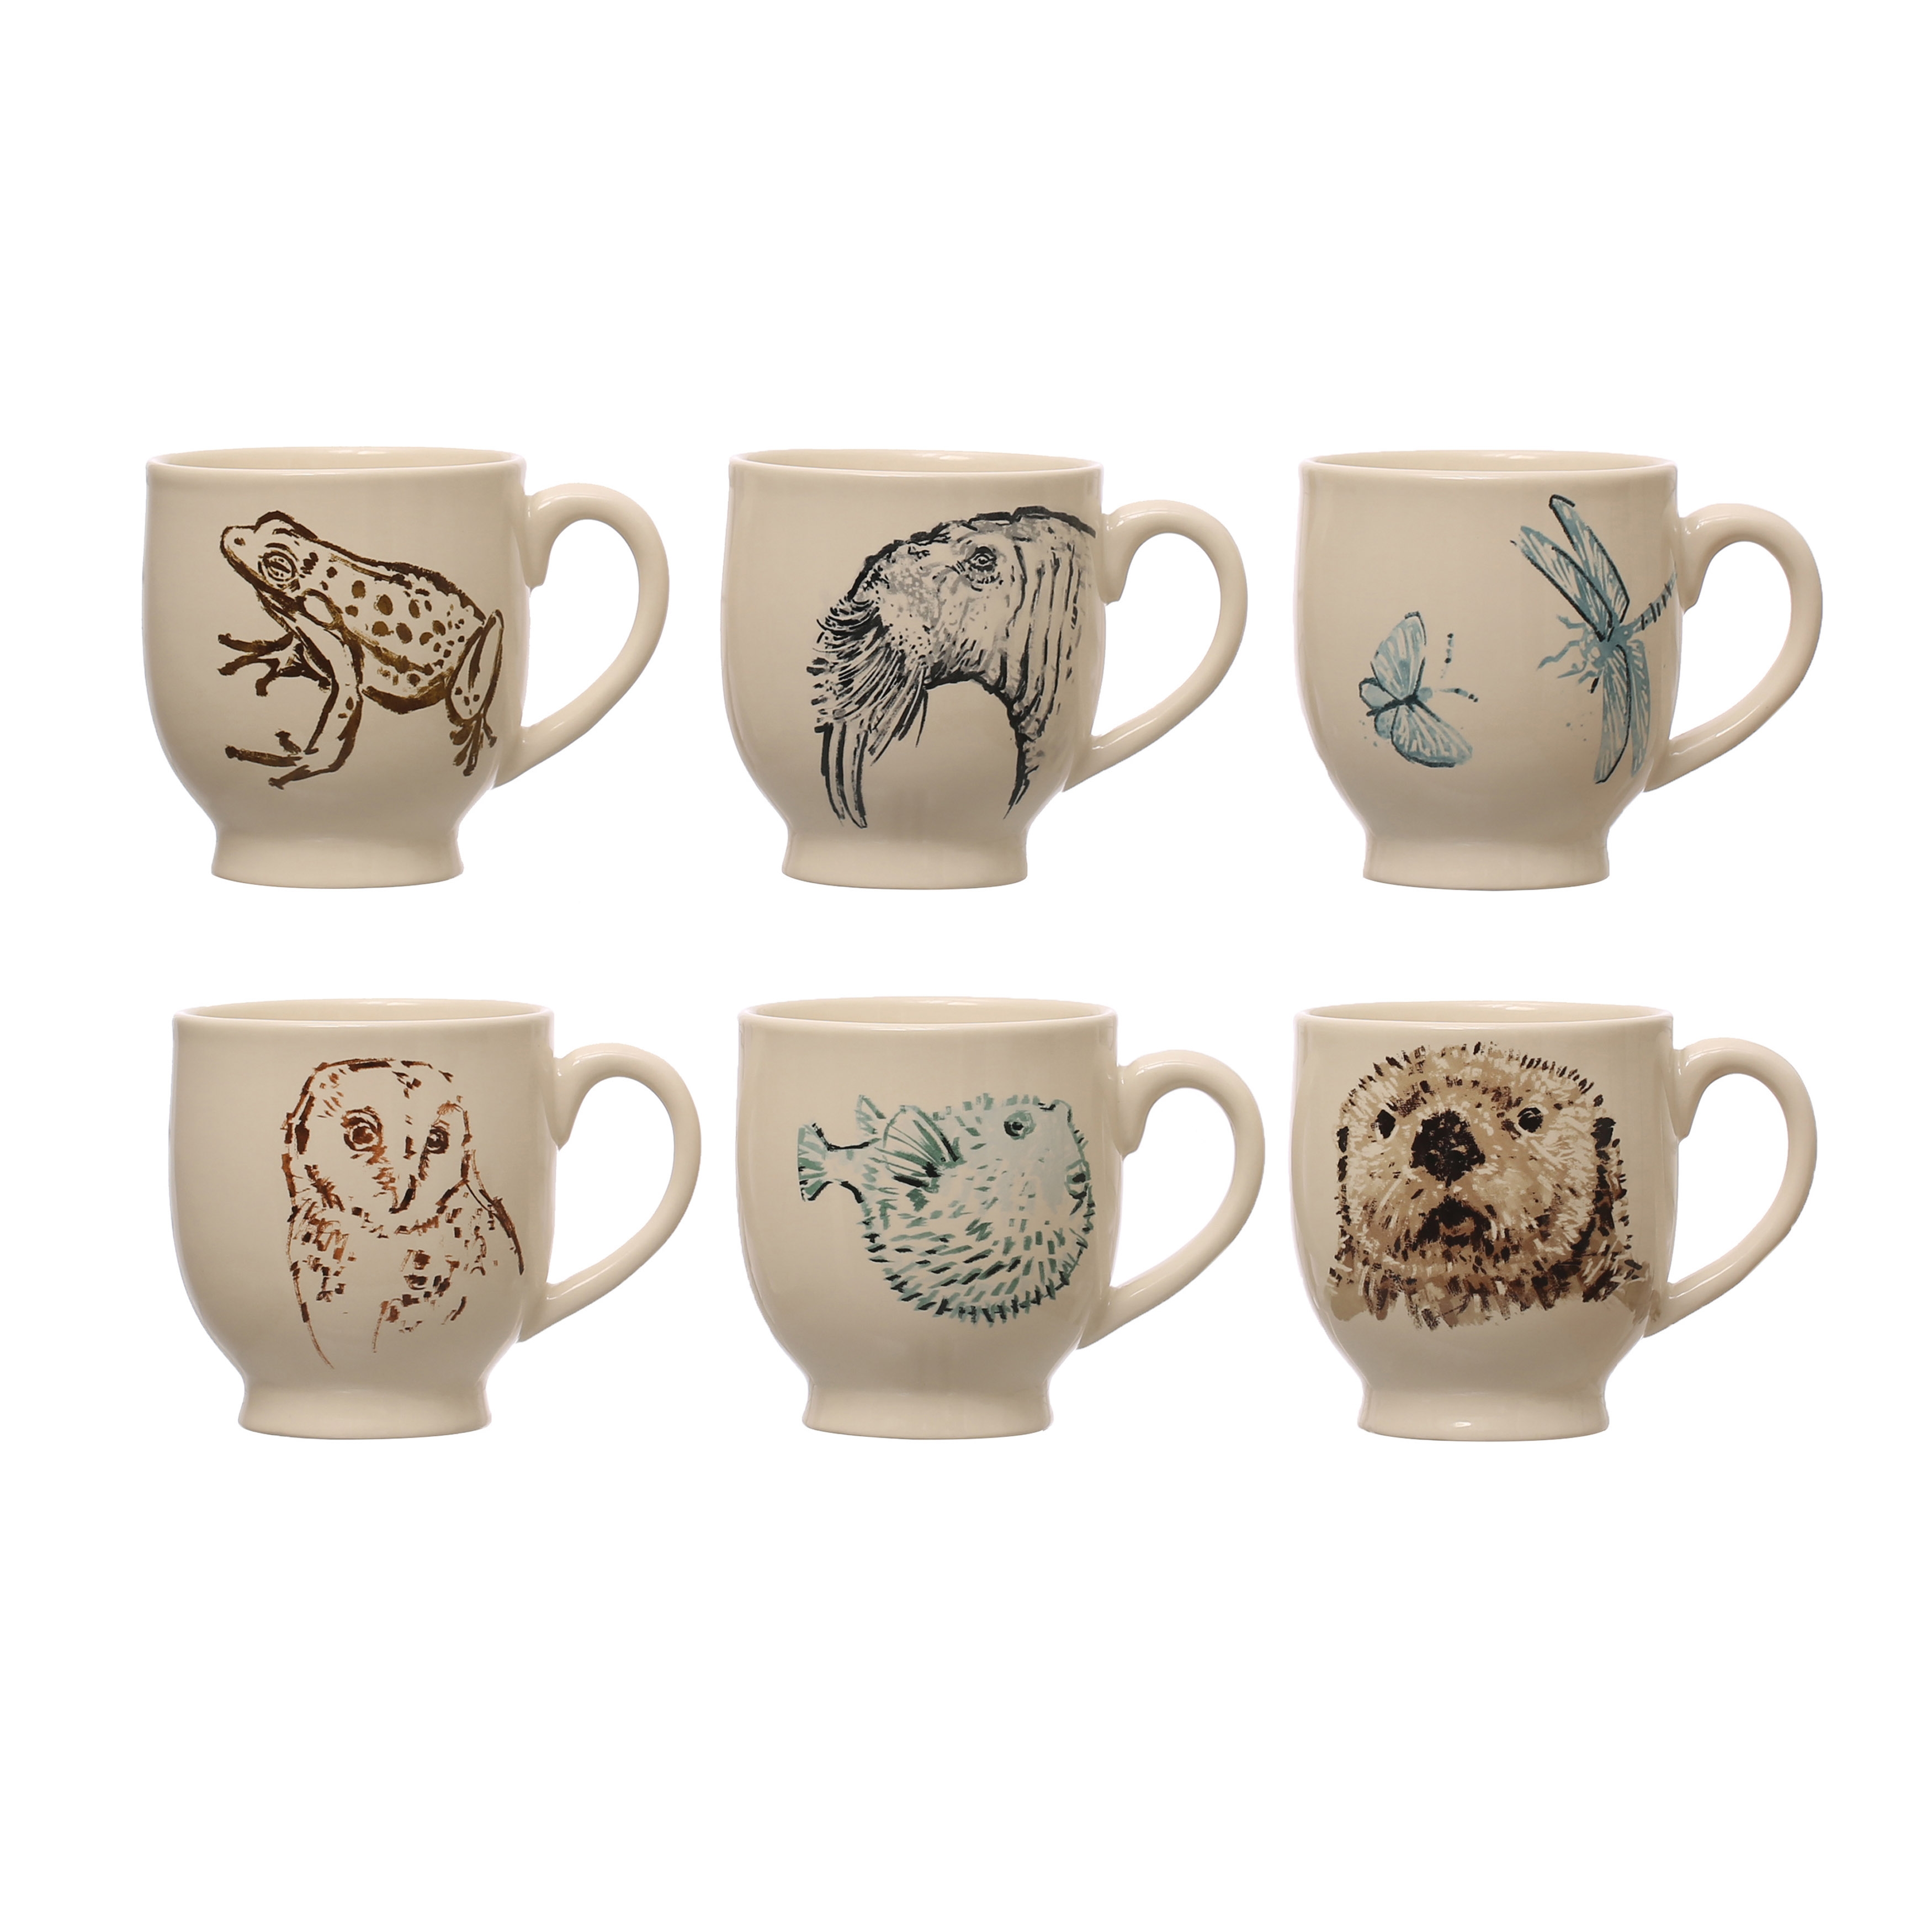 5 Inches Round Stoneware Mug with Animal Print Designs, Cream, Set of 6 - Image 0